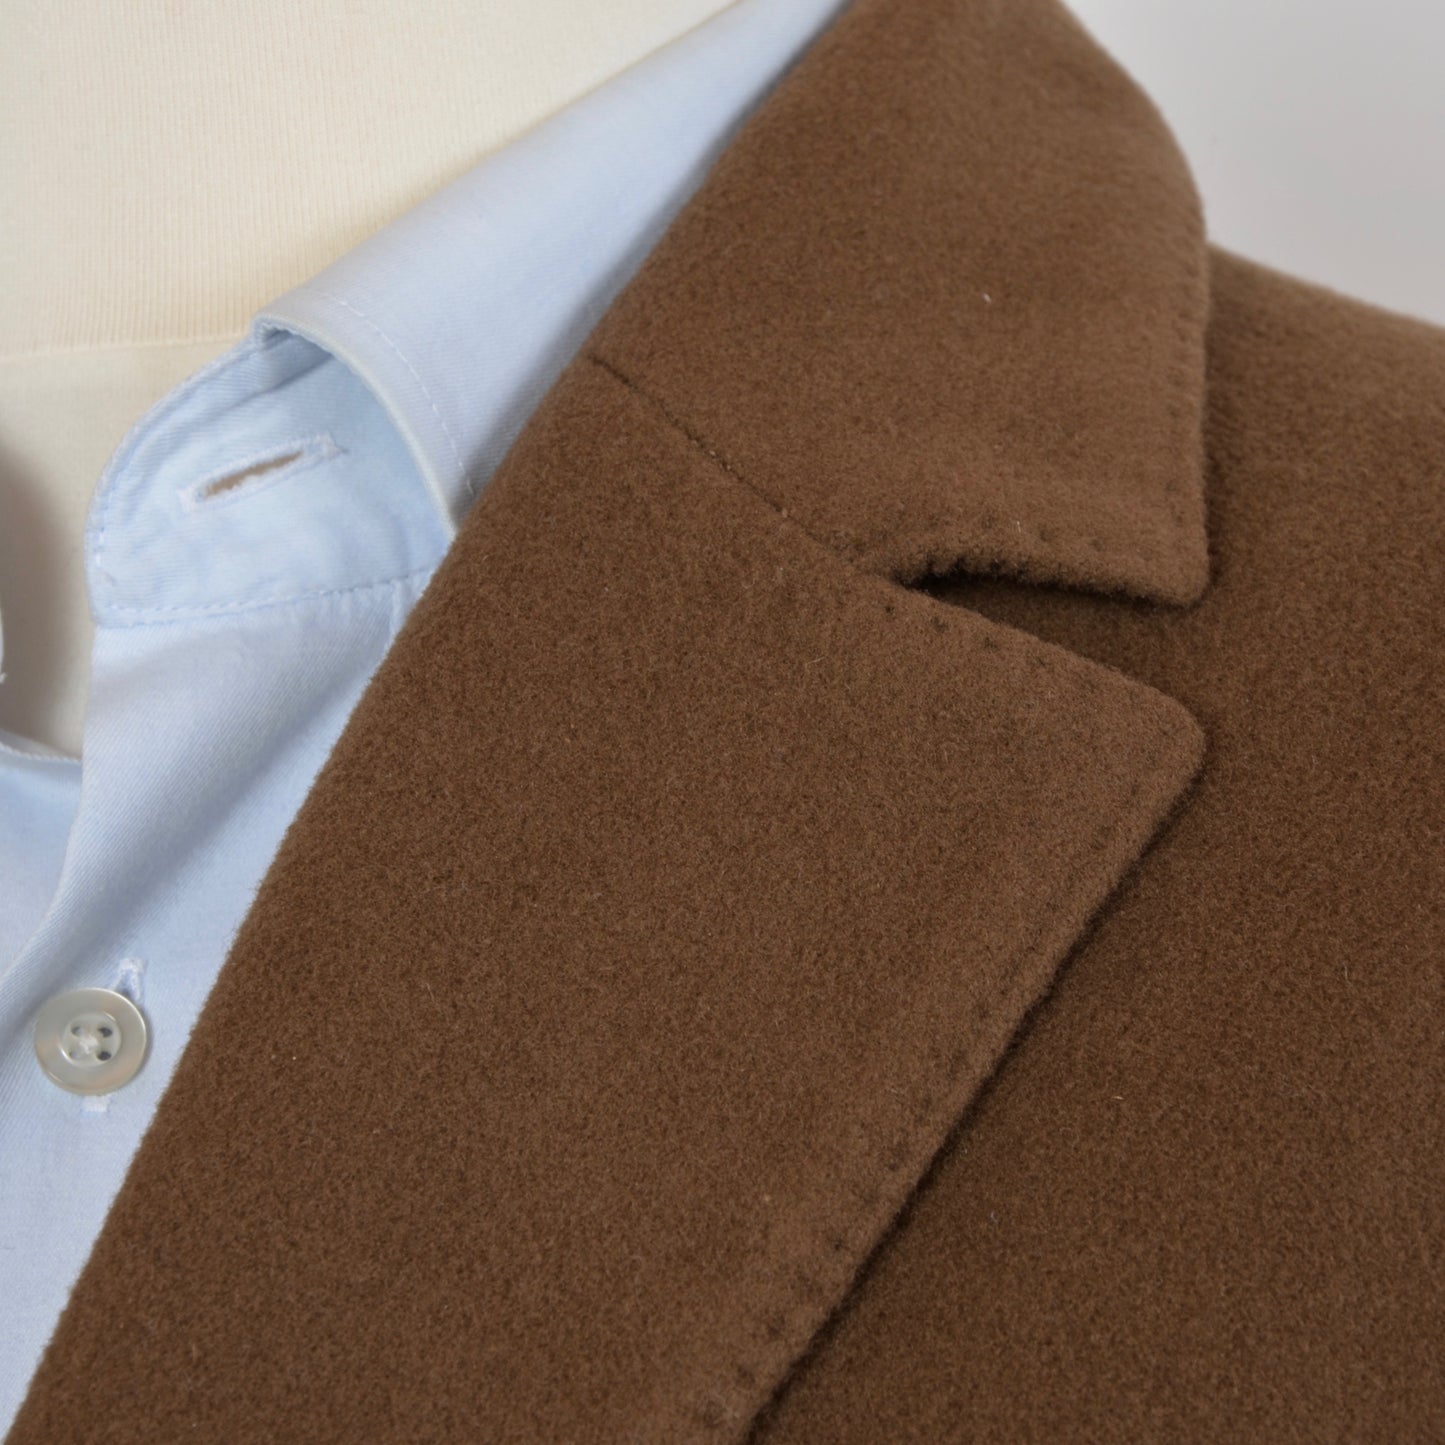 Hugo Boss Wool Cashmere Overcoat Size 54 - Brown